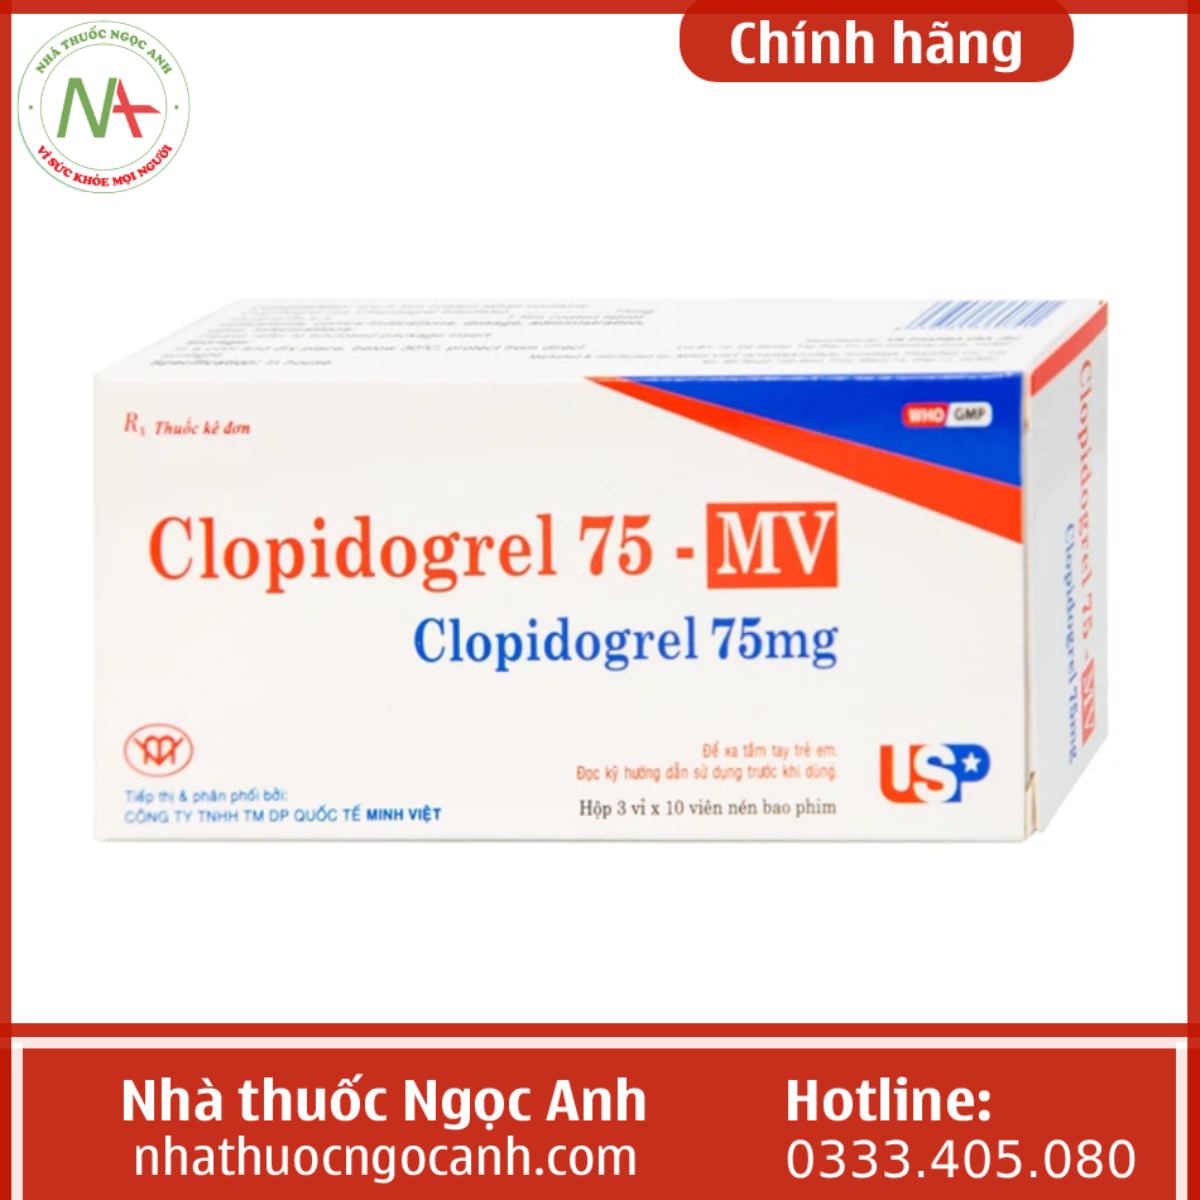 Clopidogrel 75-MV